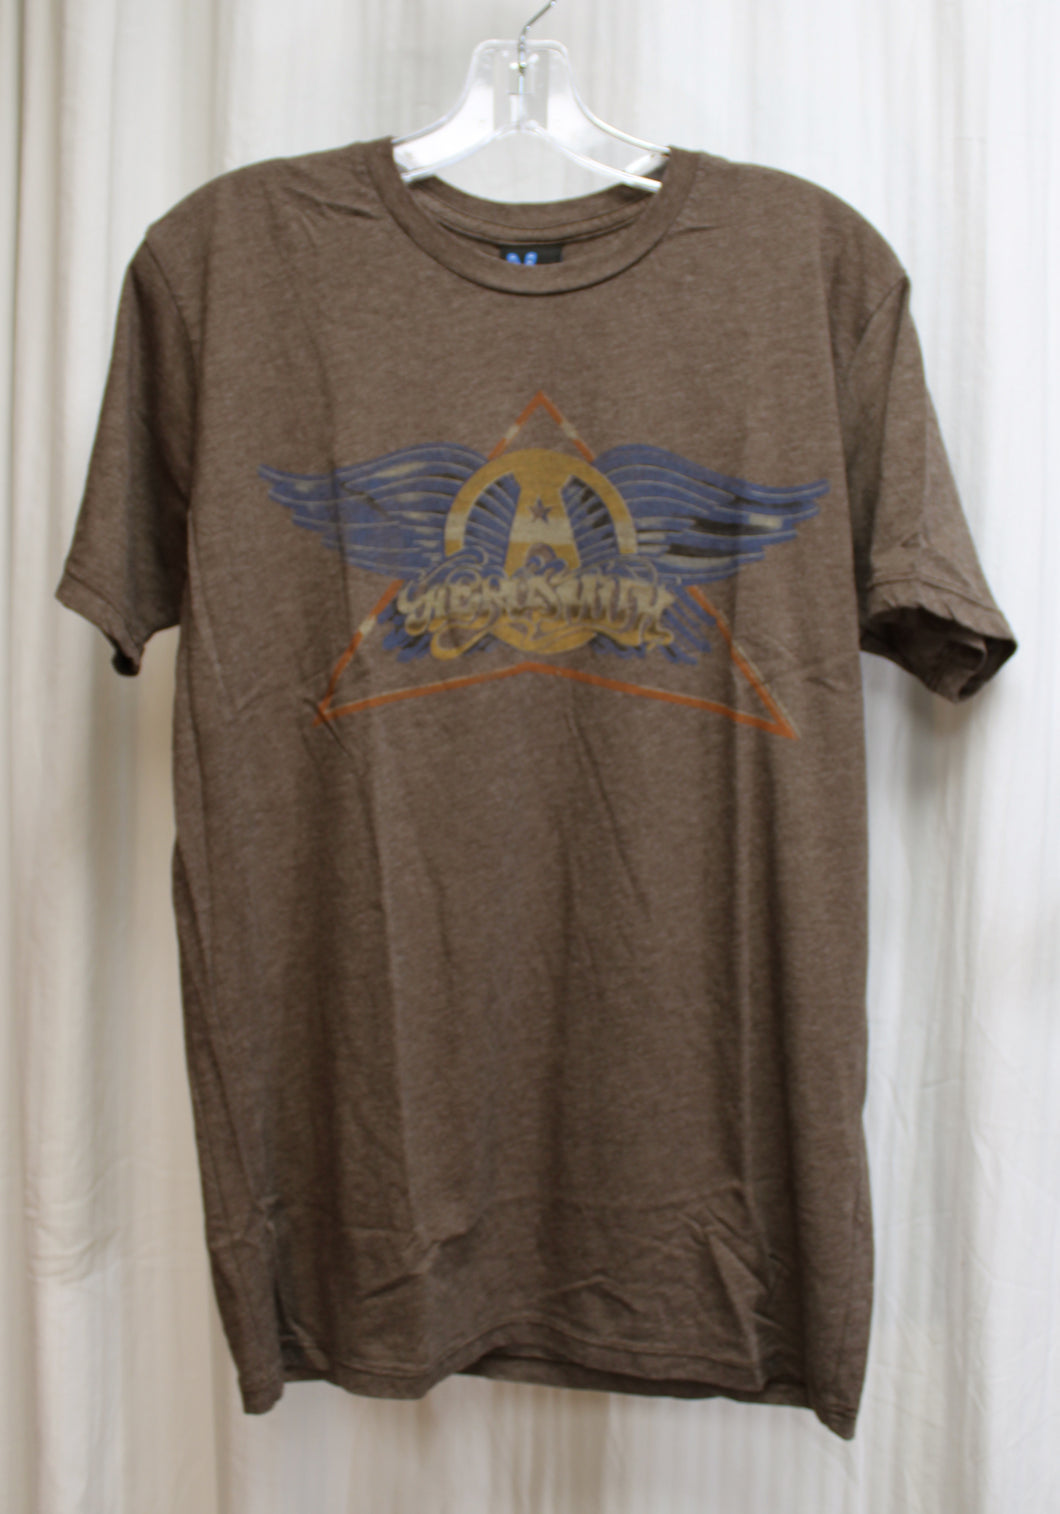 Junk Food - Aerosmith Logo - Brown Heathered T-Shirt - Size S